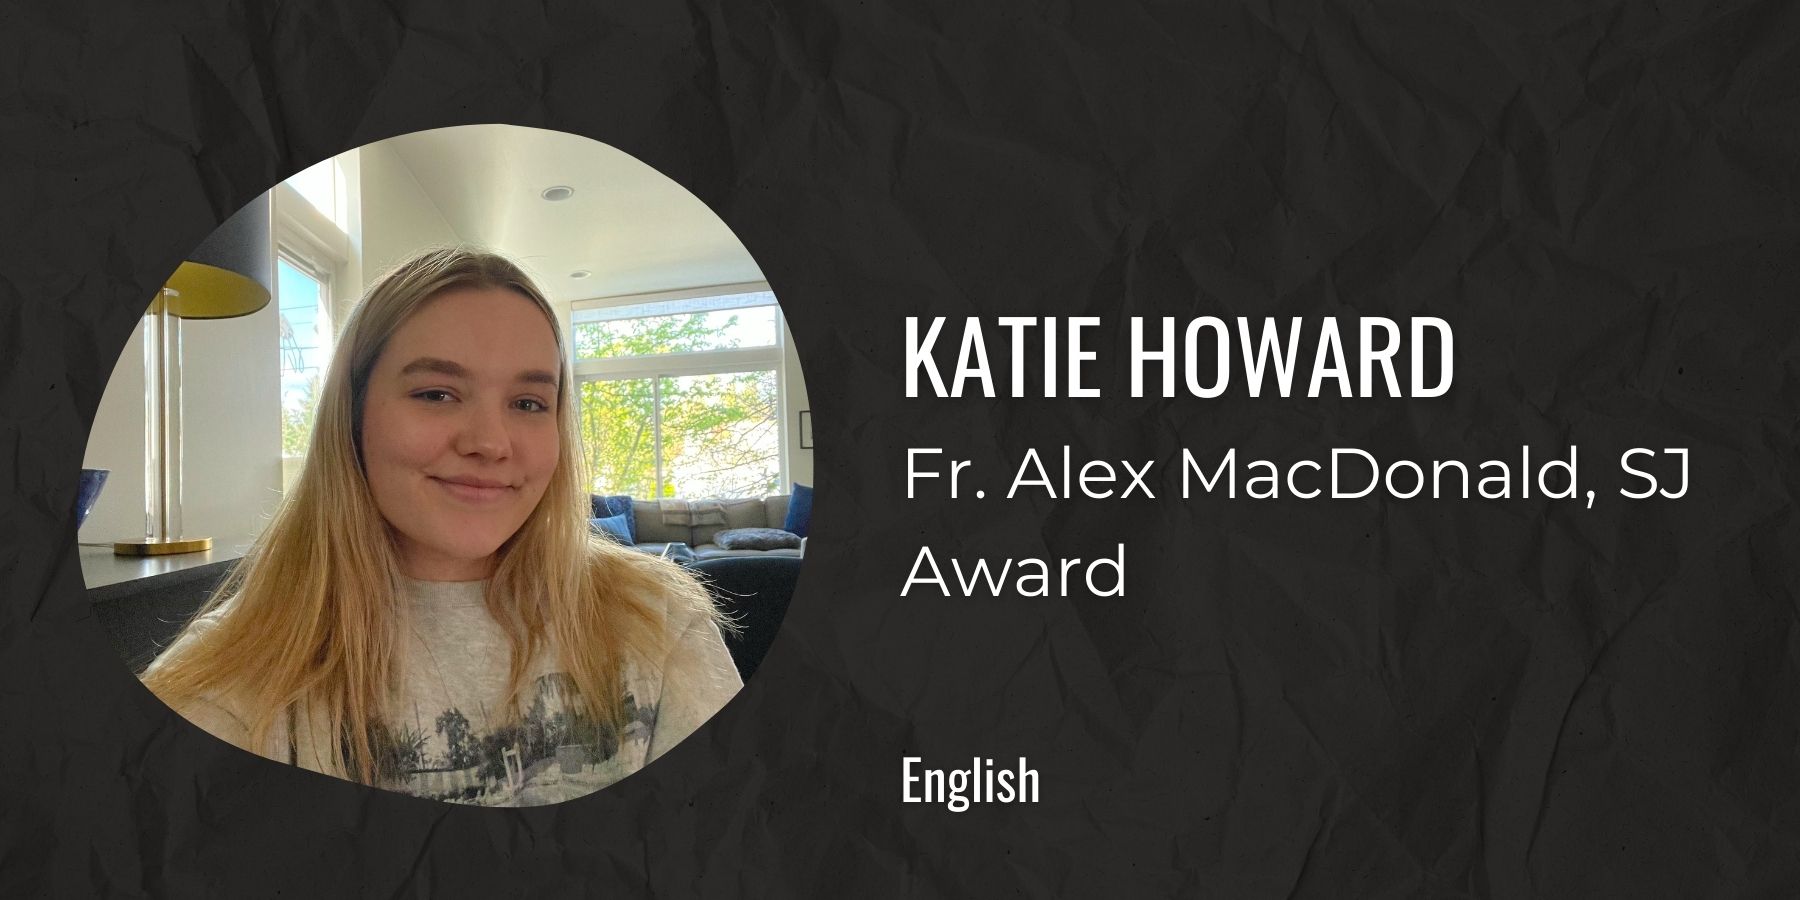 Photo of Katie Howard and text: Fr. Alex MacDonald, SJ Award